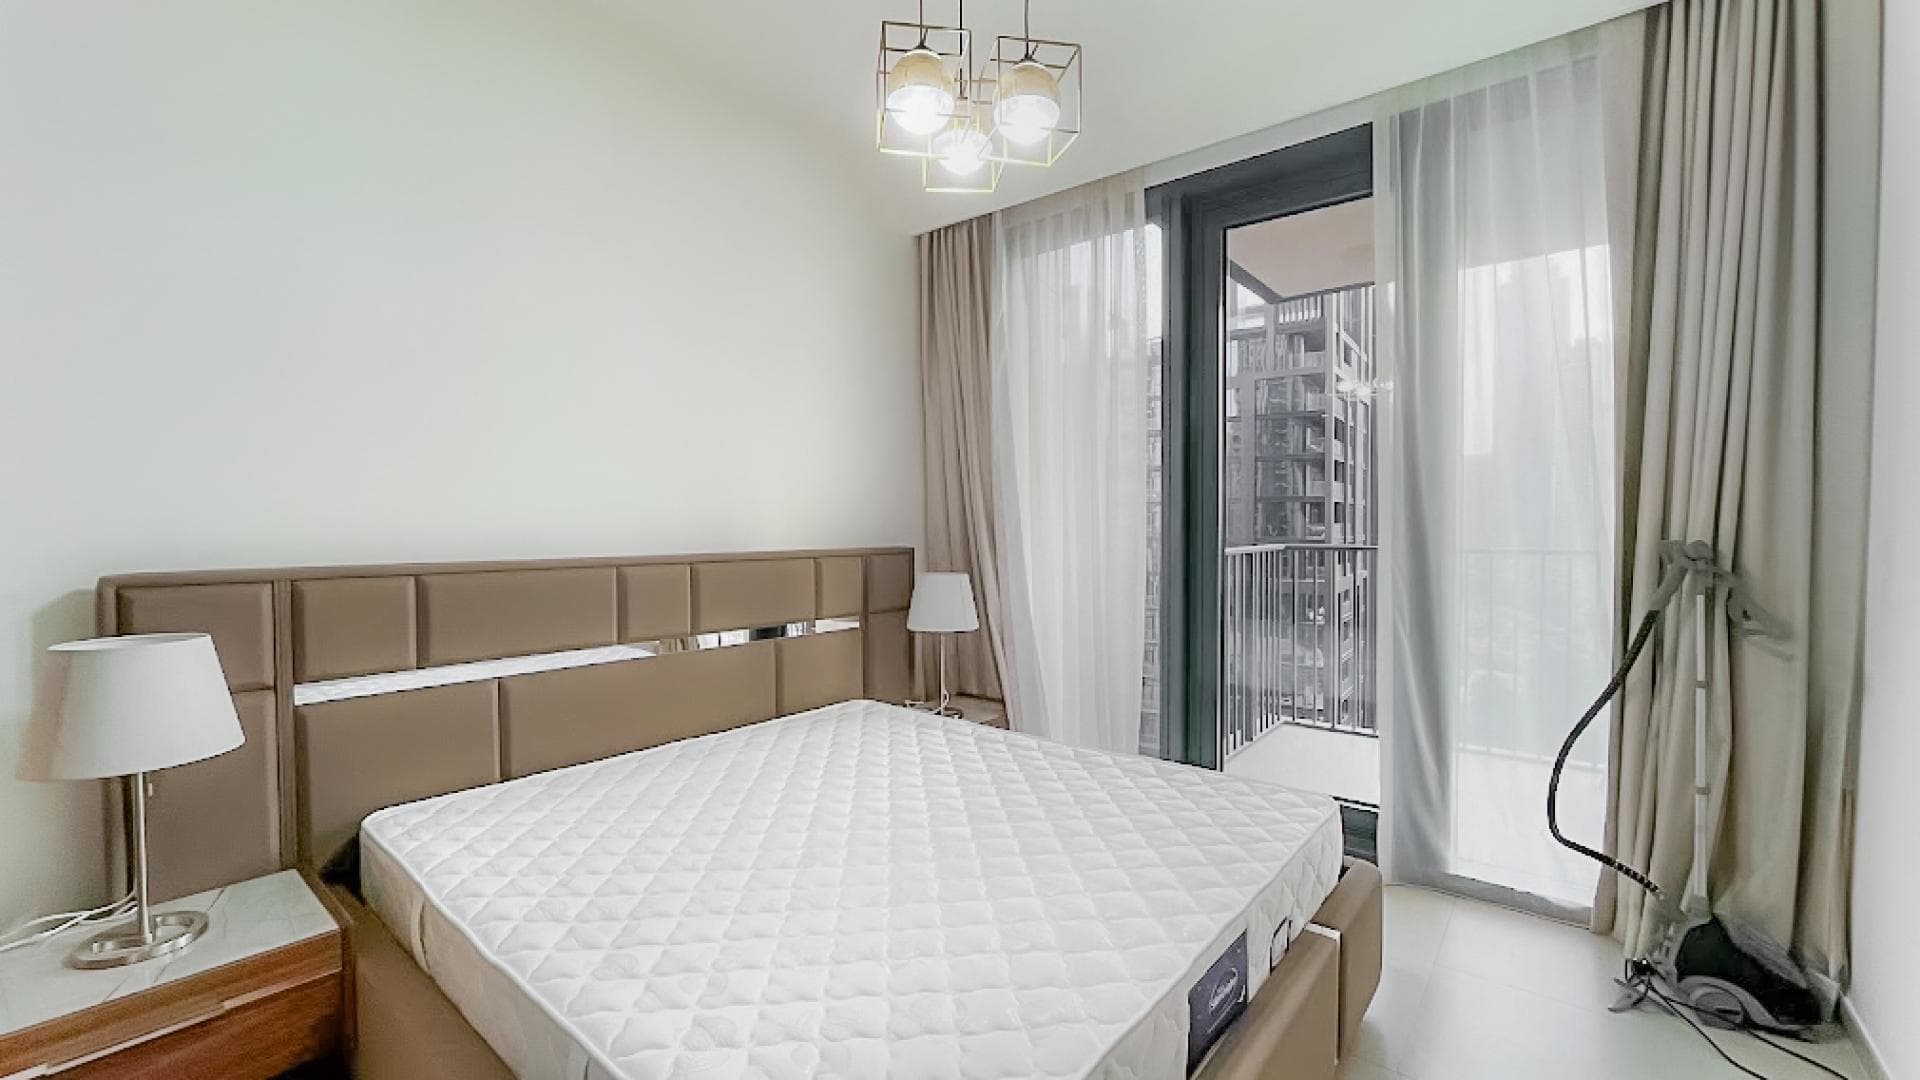 1 Bedroom Apartment For Rent West Phase Iii Lp37026 184c26f41c304700.jpg